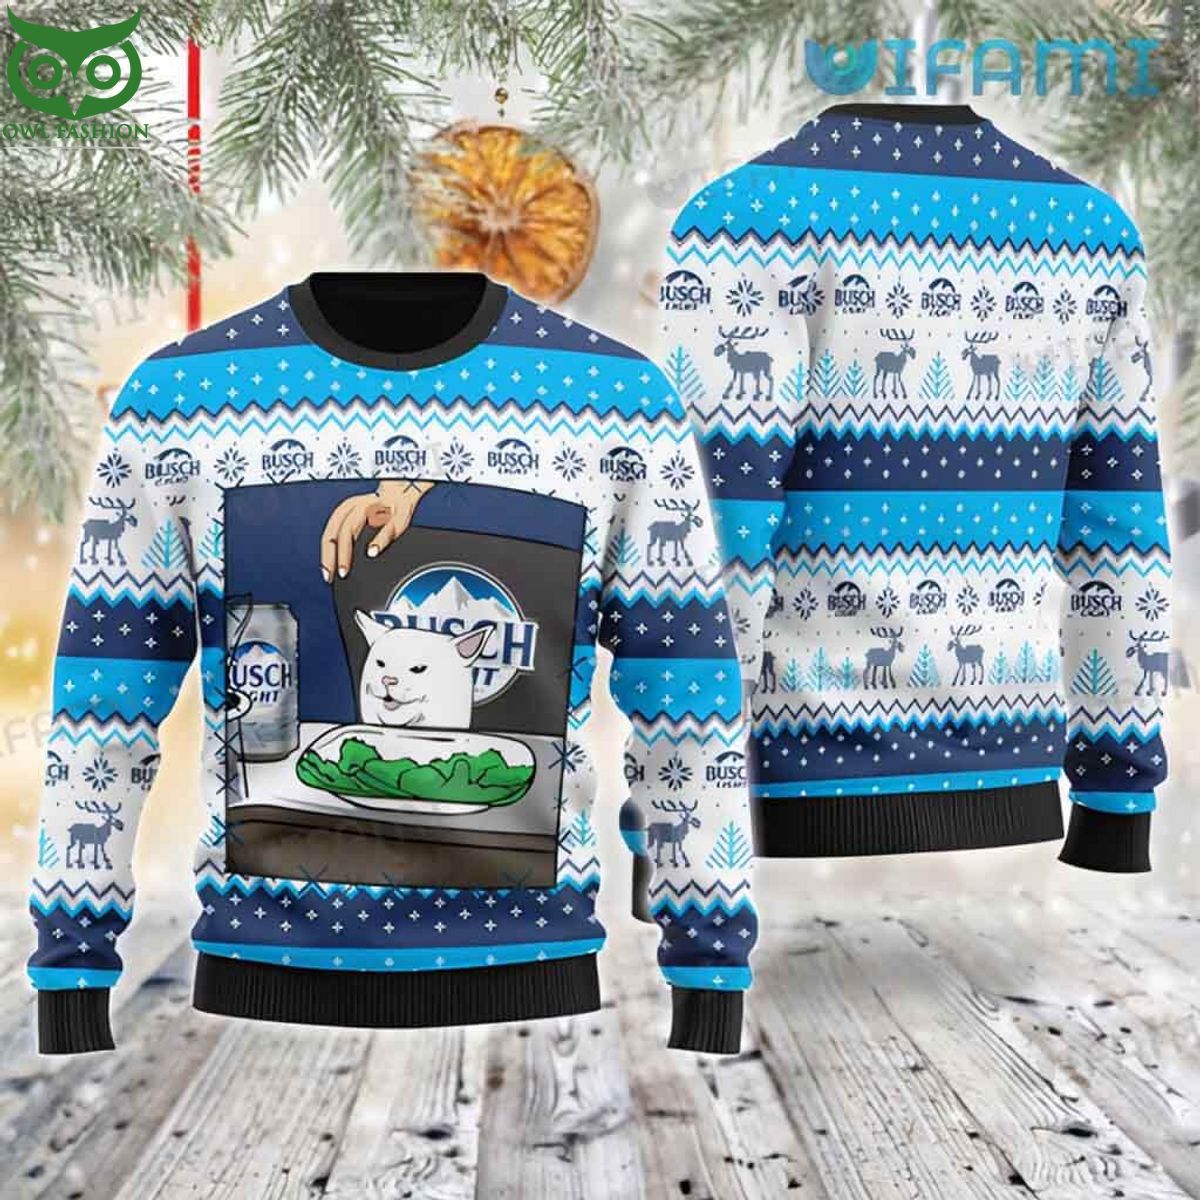 busch light ugly sweater cat meme christmas gift for beer lovers 1 LV2gF.jpg